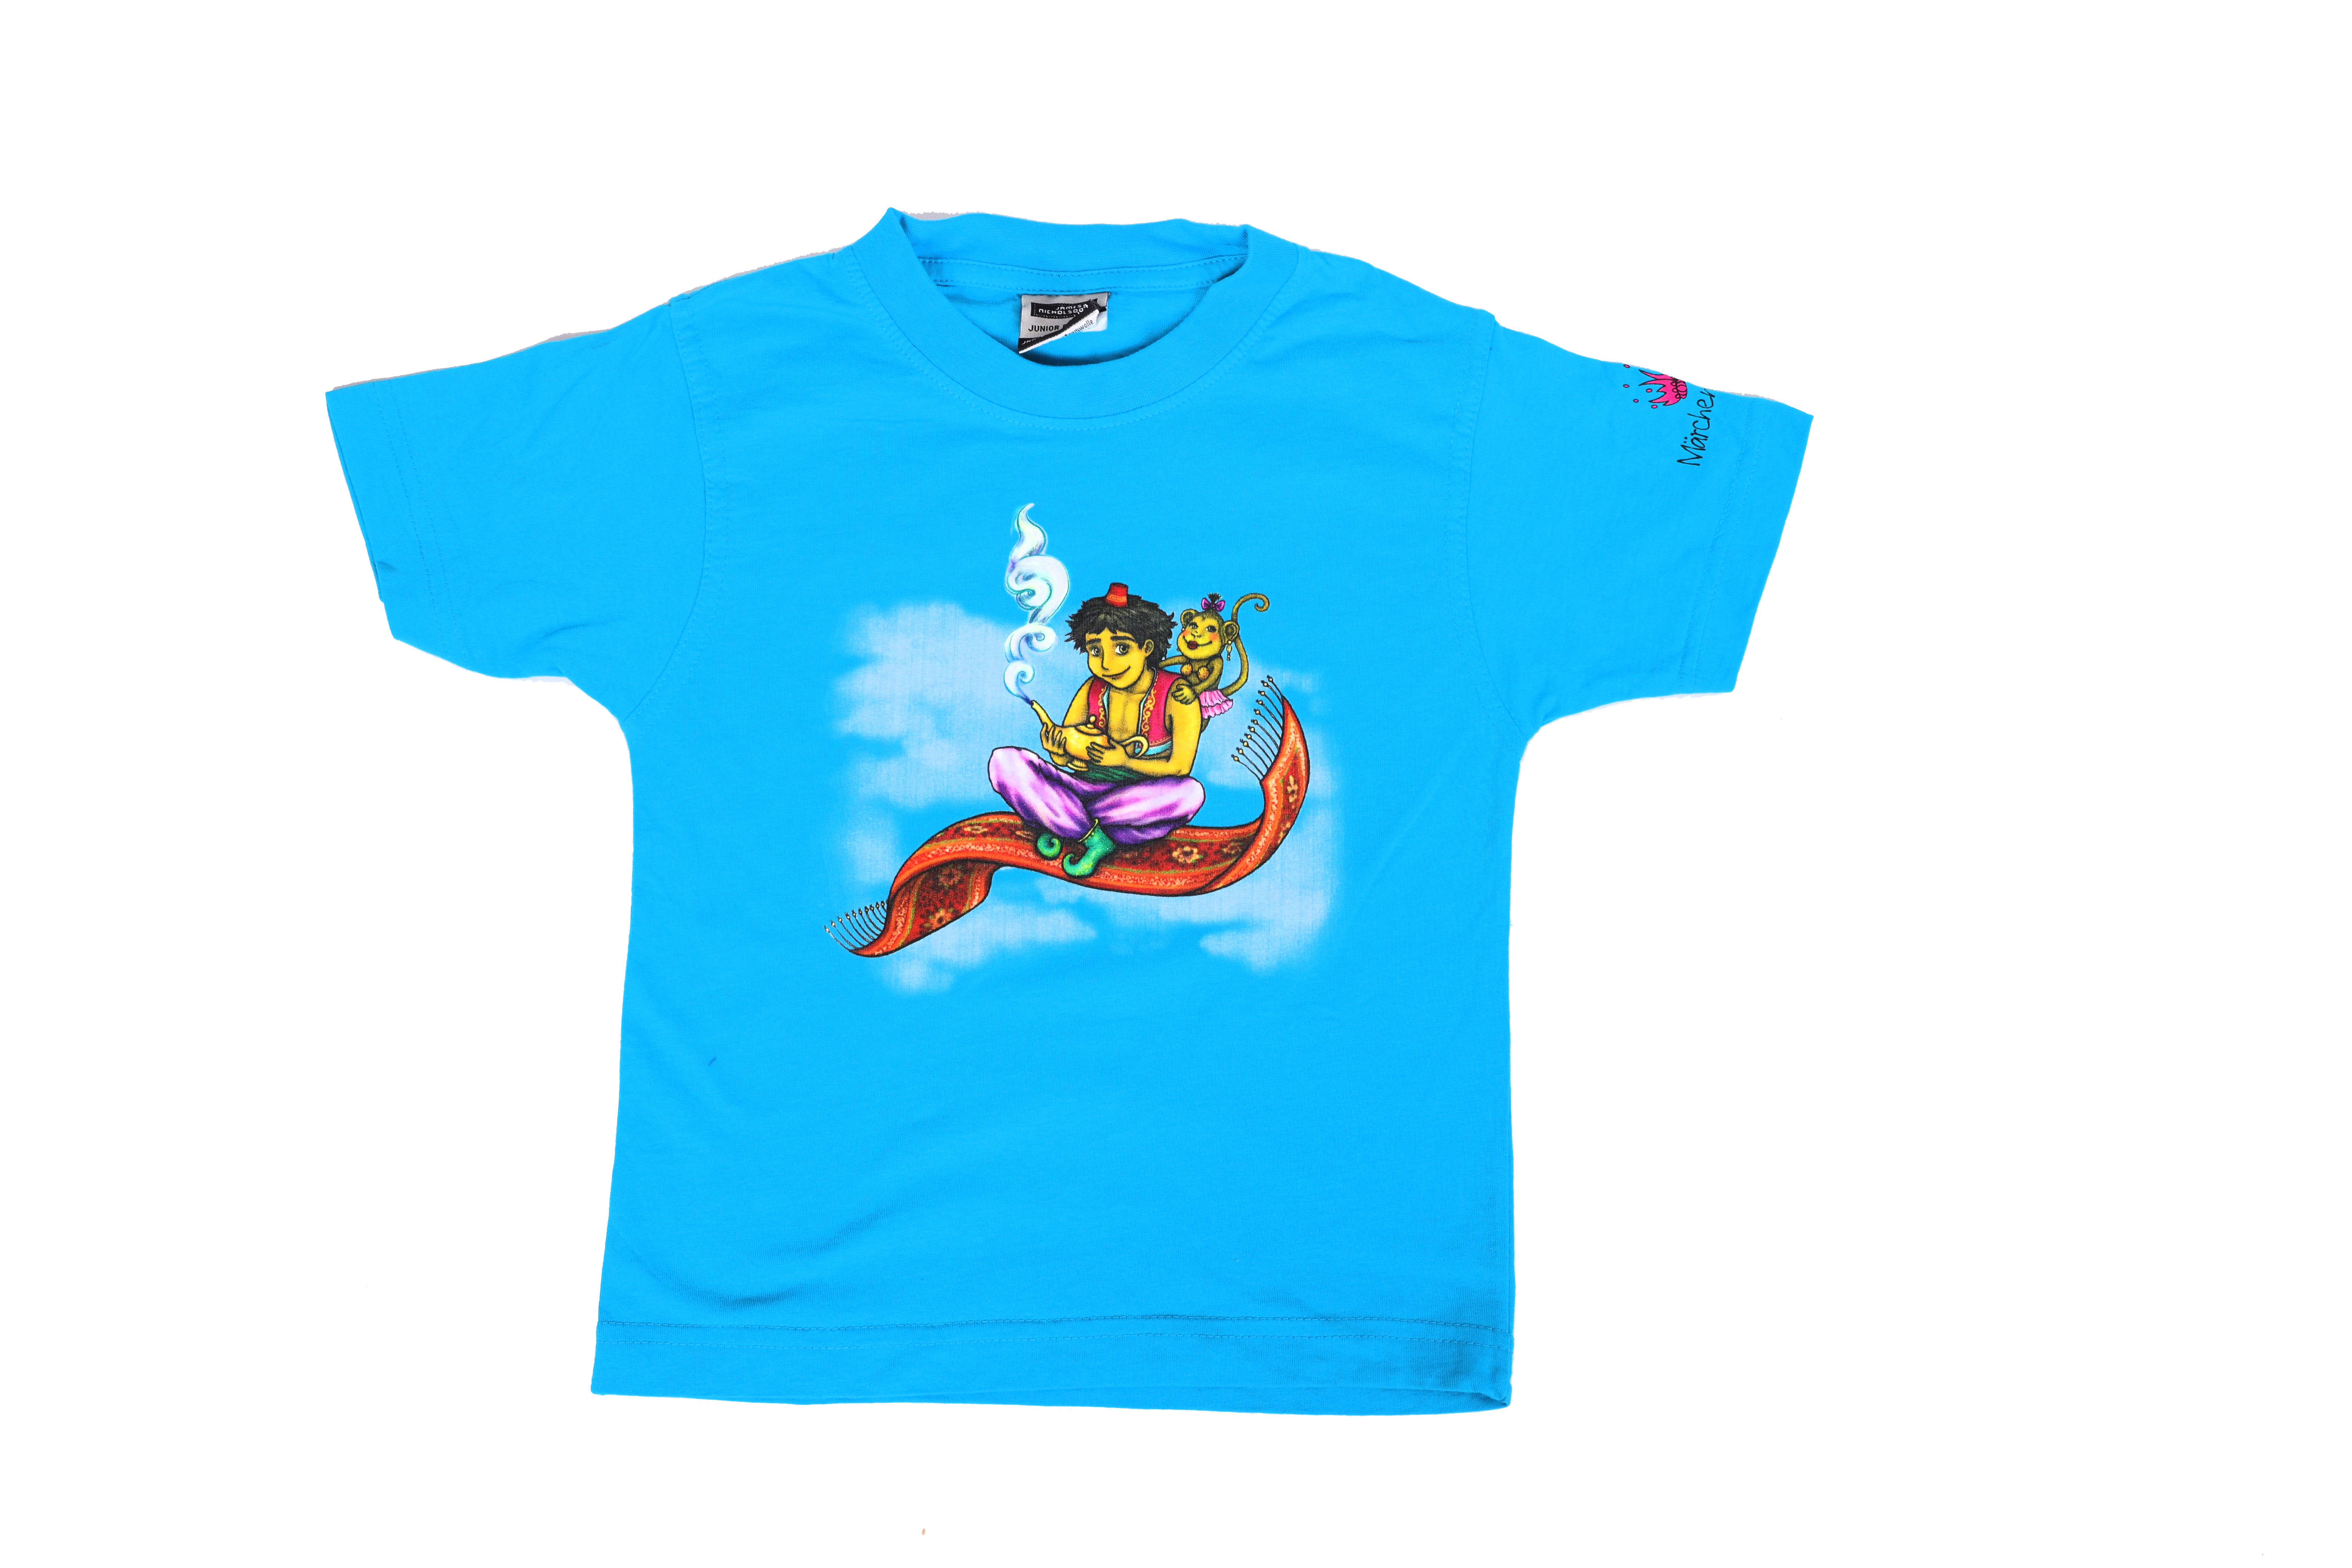 Aladin T-Shirt Türkis